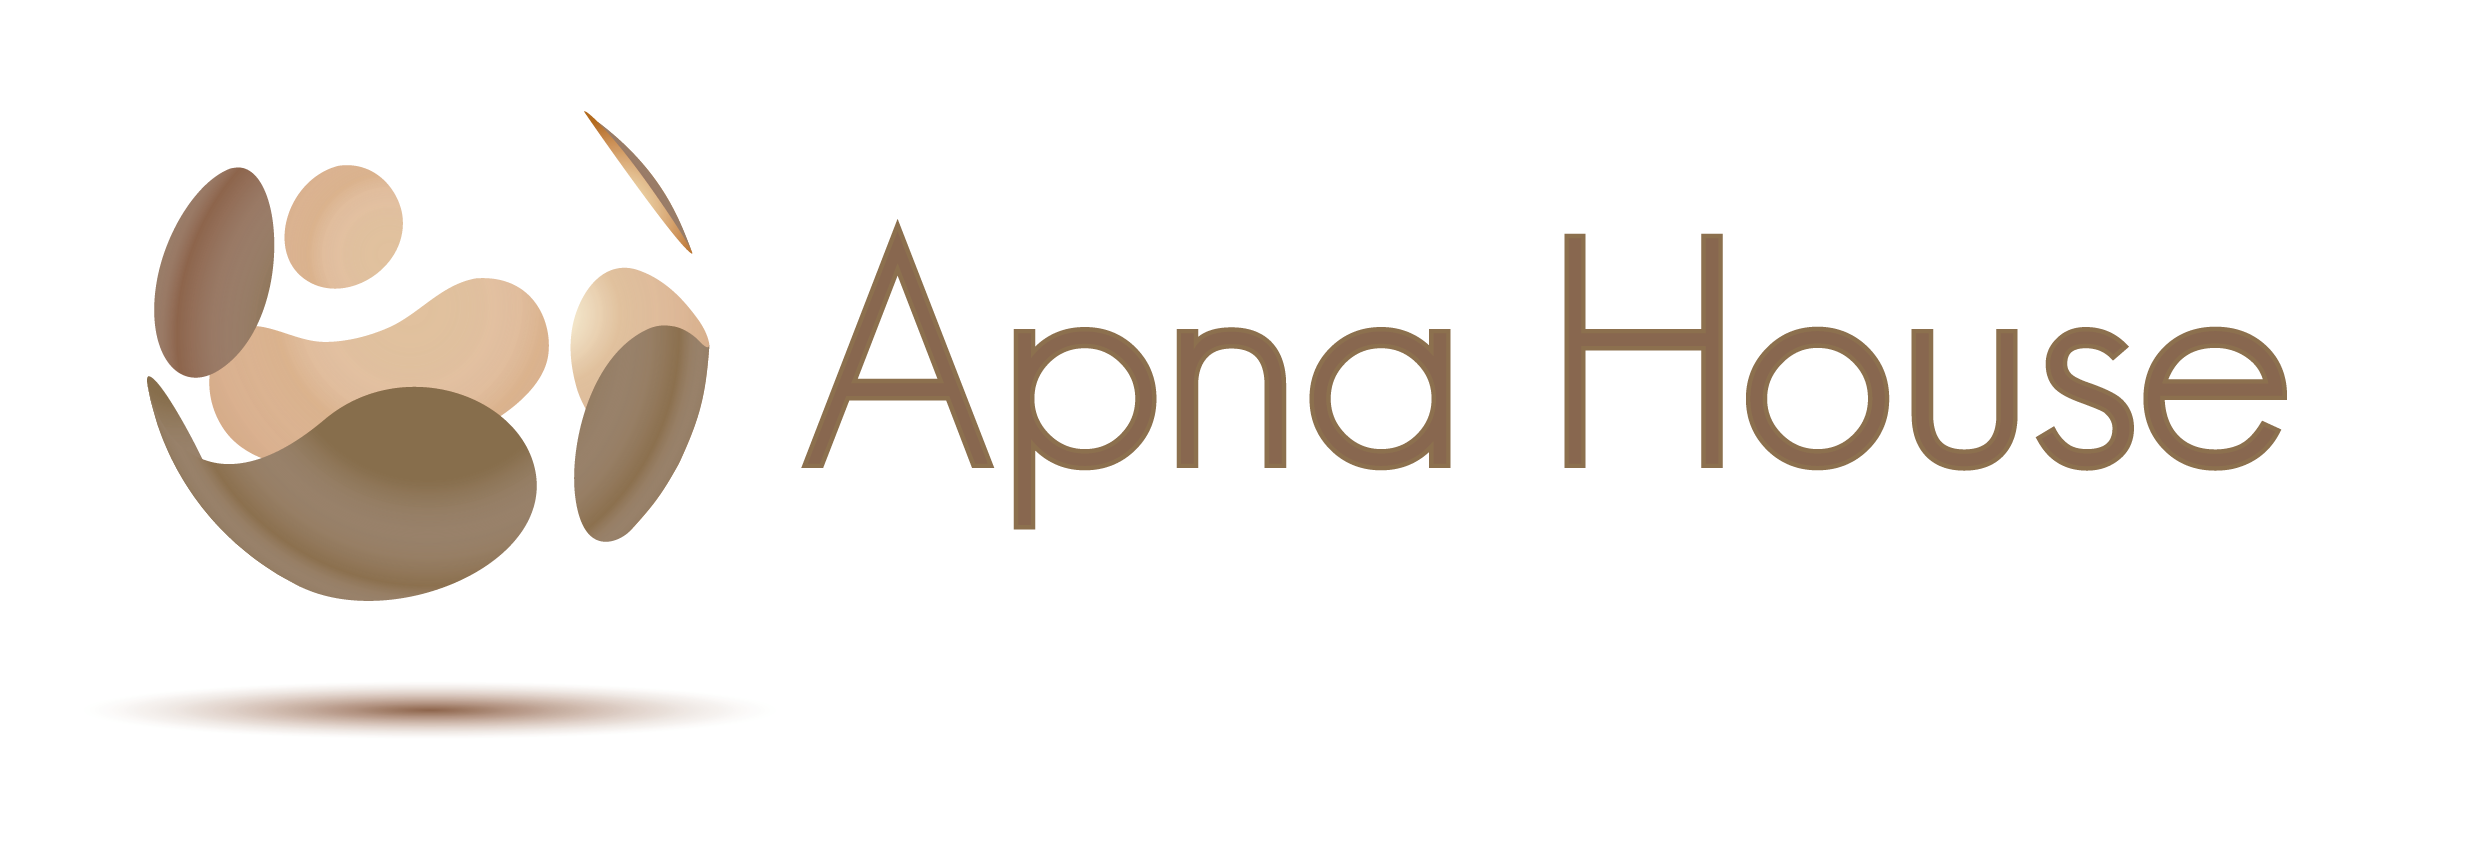 Apna House (Copy)